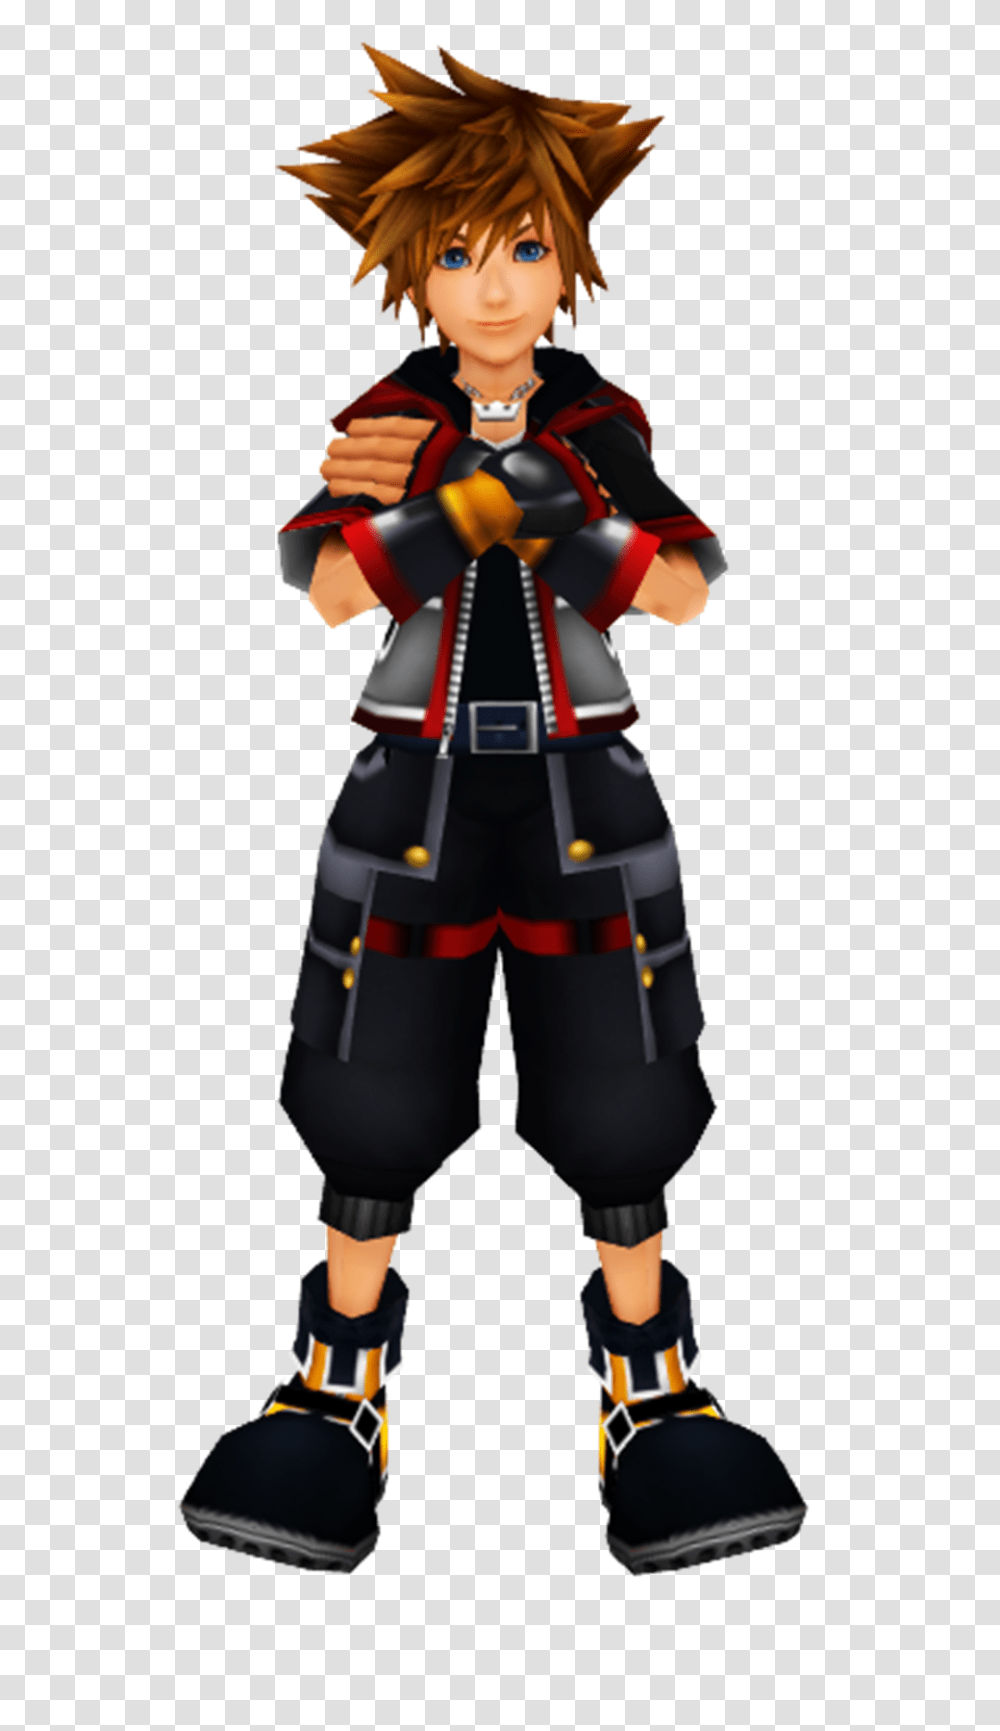 Kingdom Hearts Images Sora Kingdom Hearts Iii The Main, Person, Human, Fireman, Costume Transparent Png